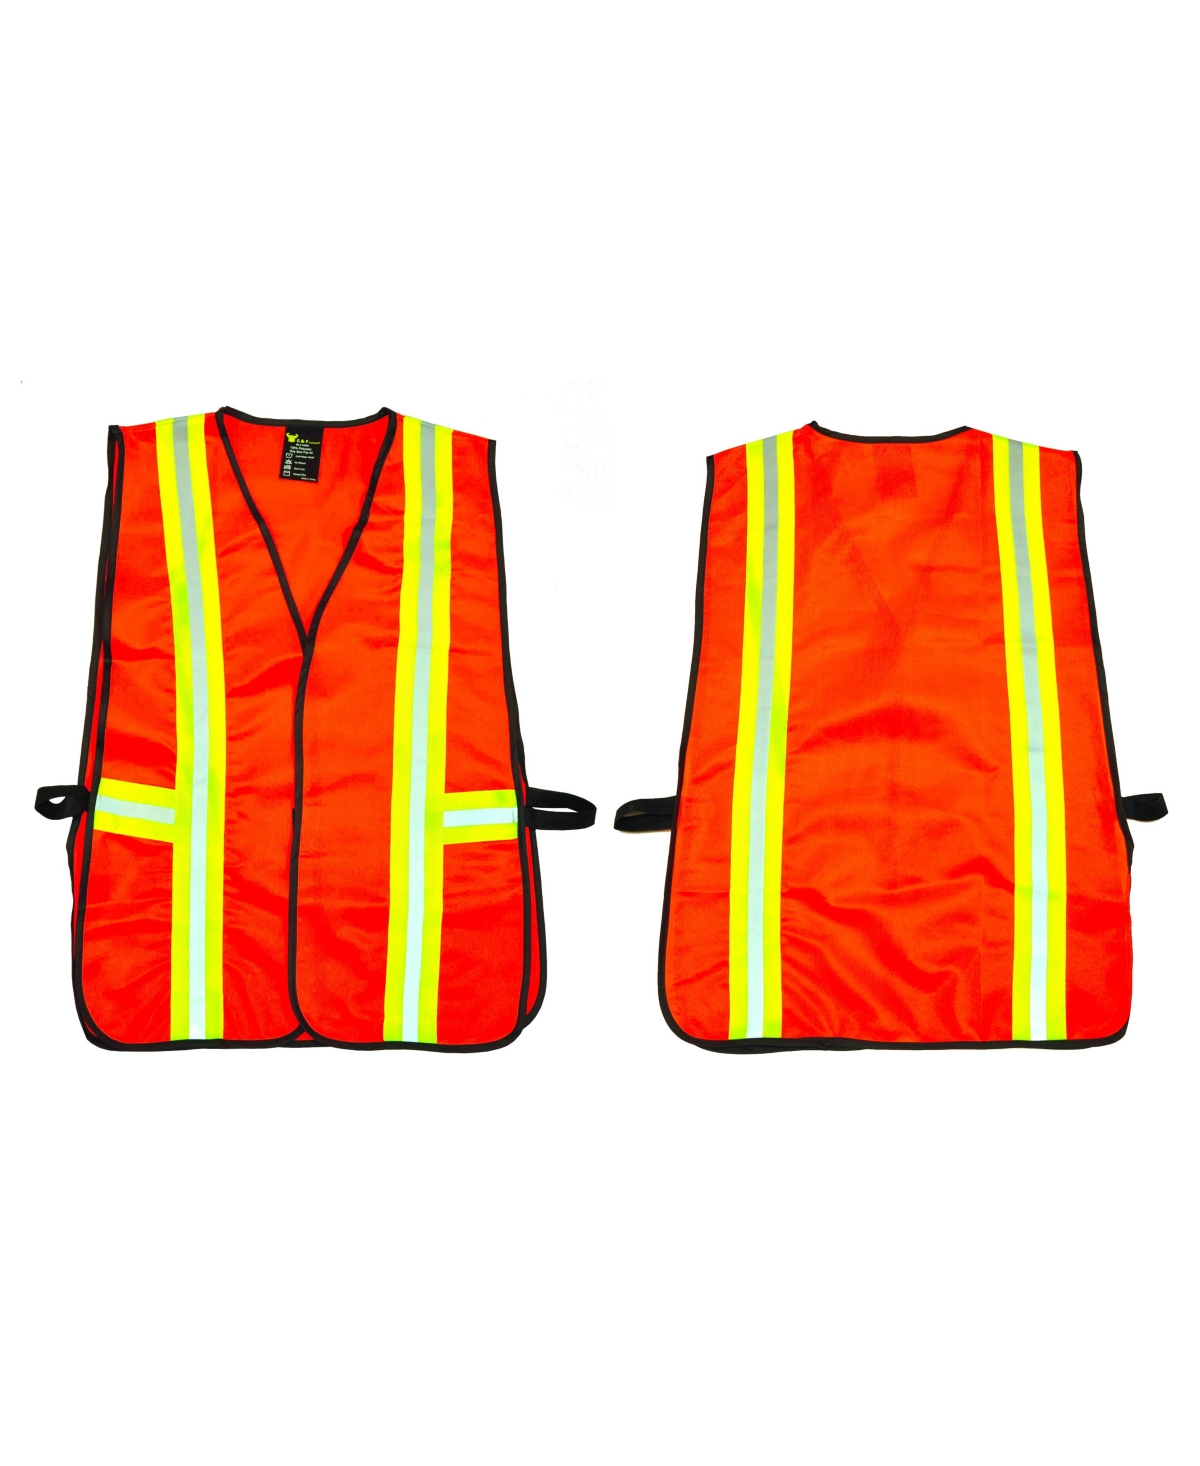 Industrial Safety Vest with Reflective Stripes - Orange